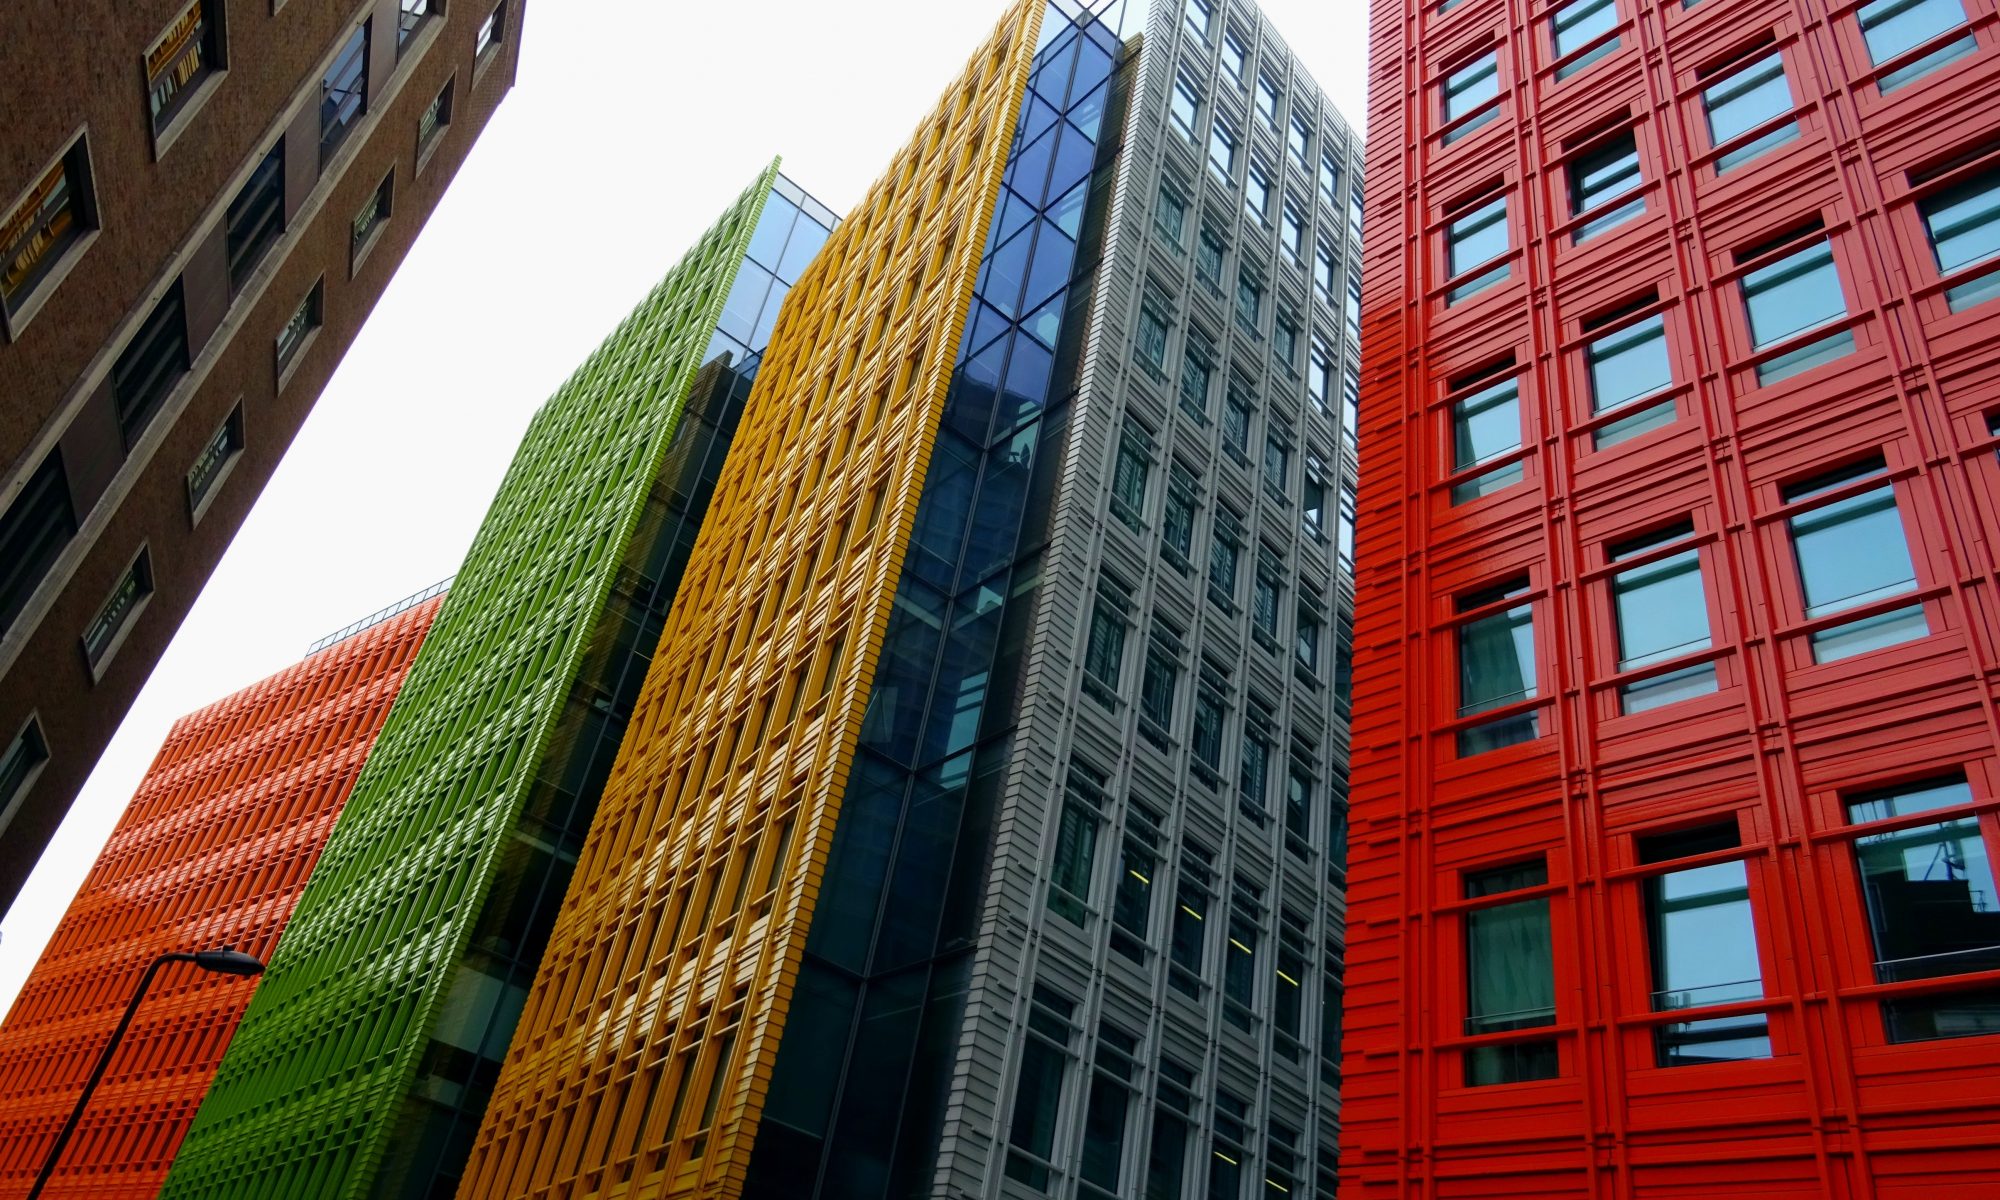 Colourful urban apartment buildings